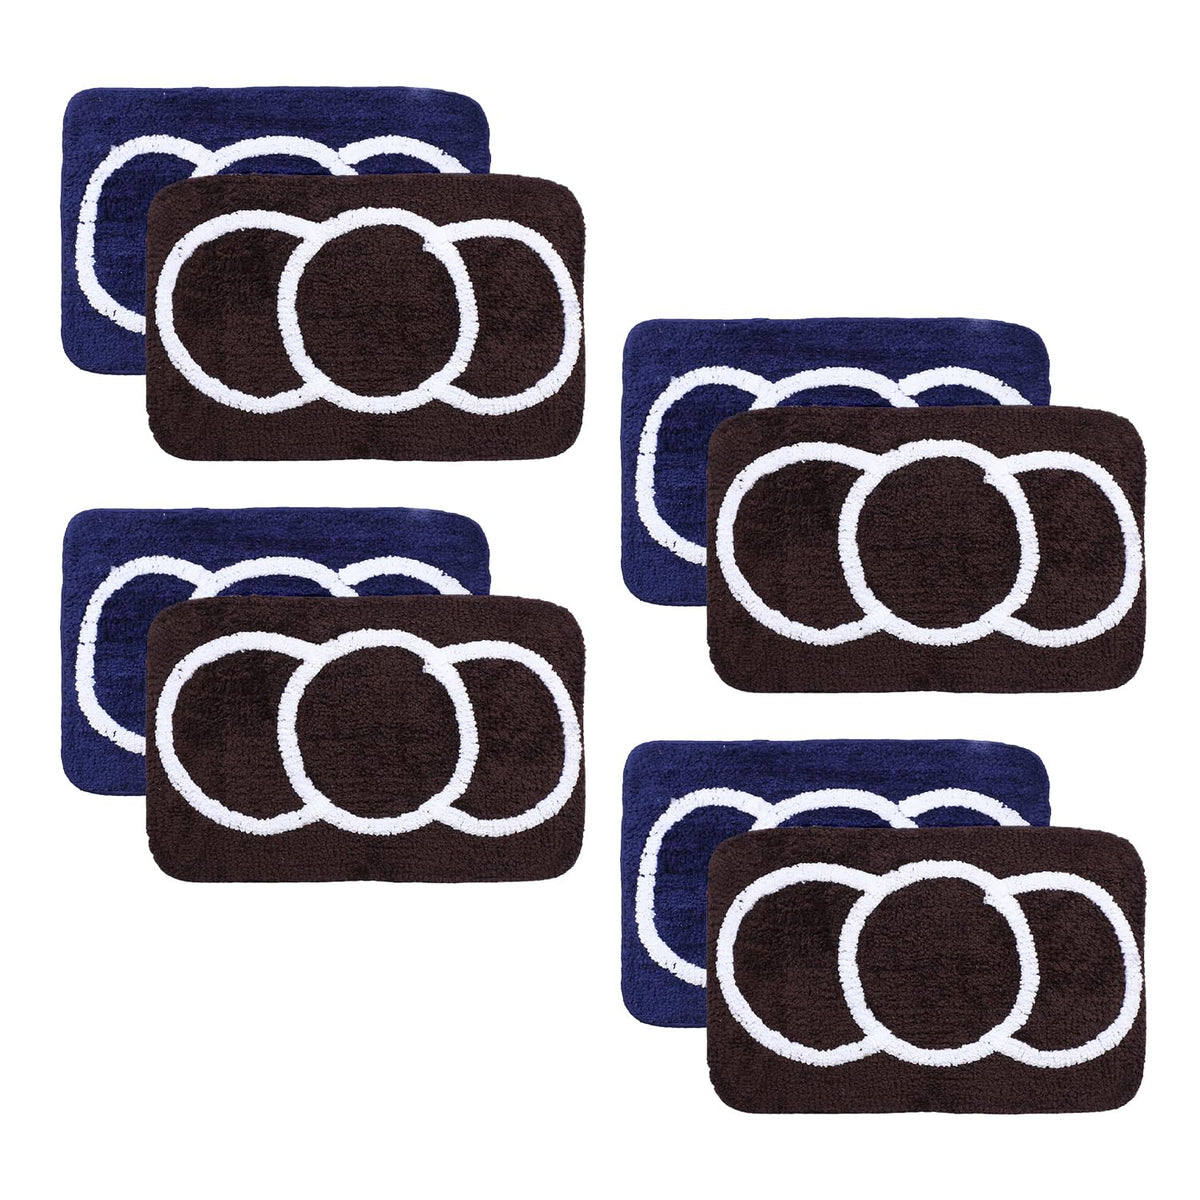 Kuber Industries Pack of 4 Super Soft Door mat|Microfiber Anti-Slip Water Absorbant Fluffy Floor Mat|Entrance Mat for Kitchen,Bedside,Door,Living Room,60x40 cm,Set of 2|Brown and Blue